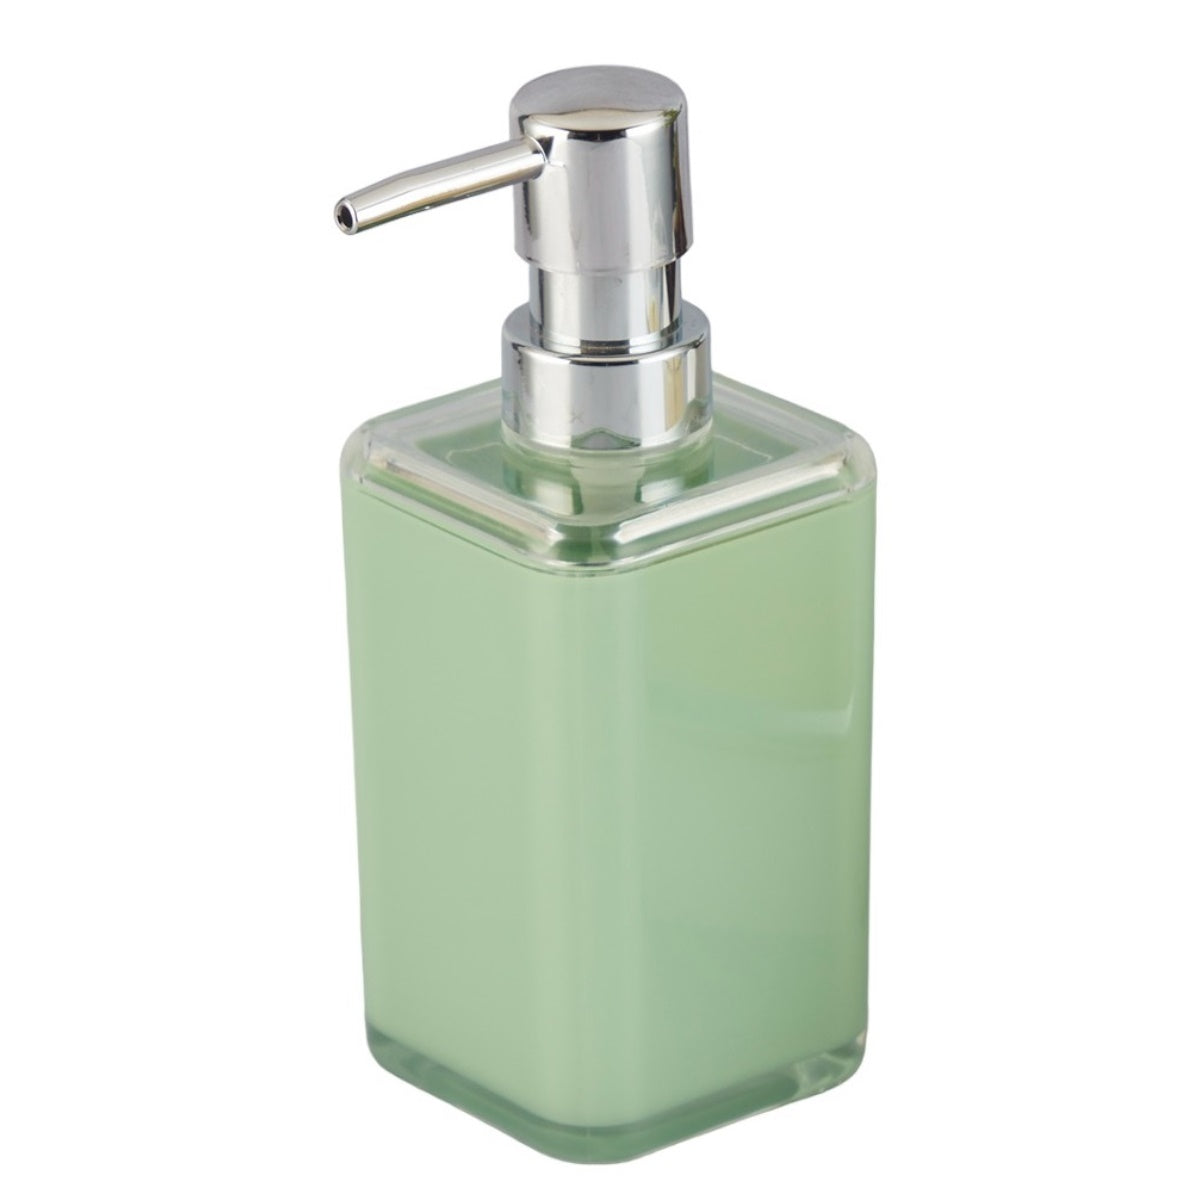 Acrylic Soap Dispenser Pump for Bathroom (10015)